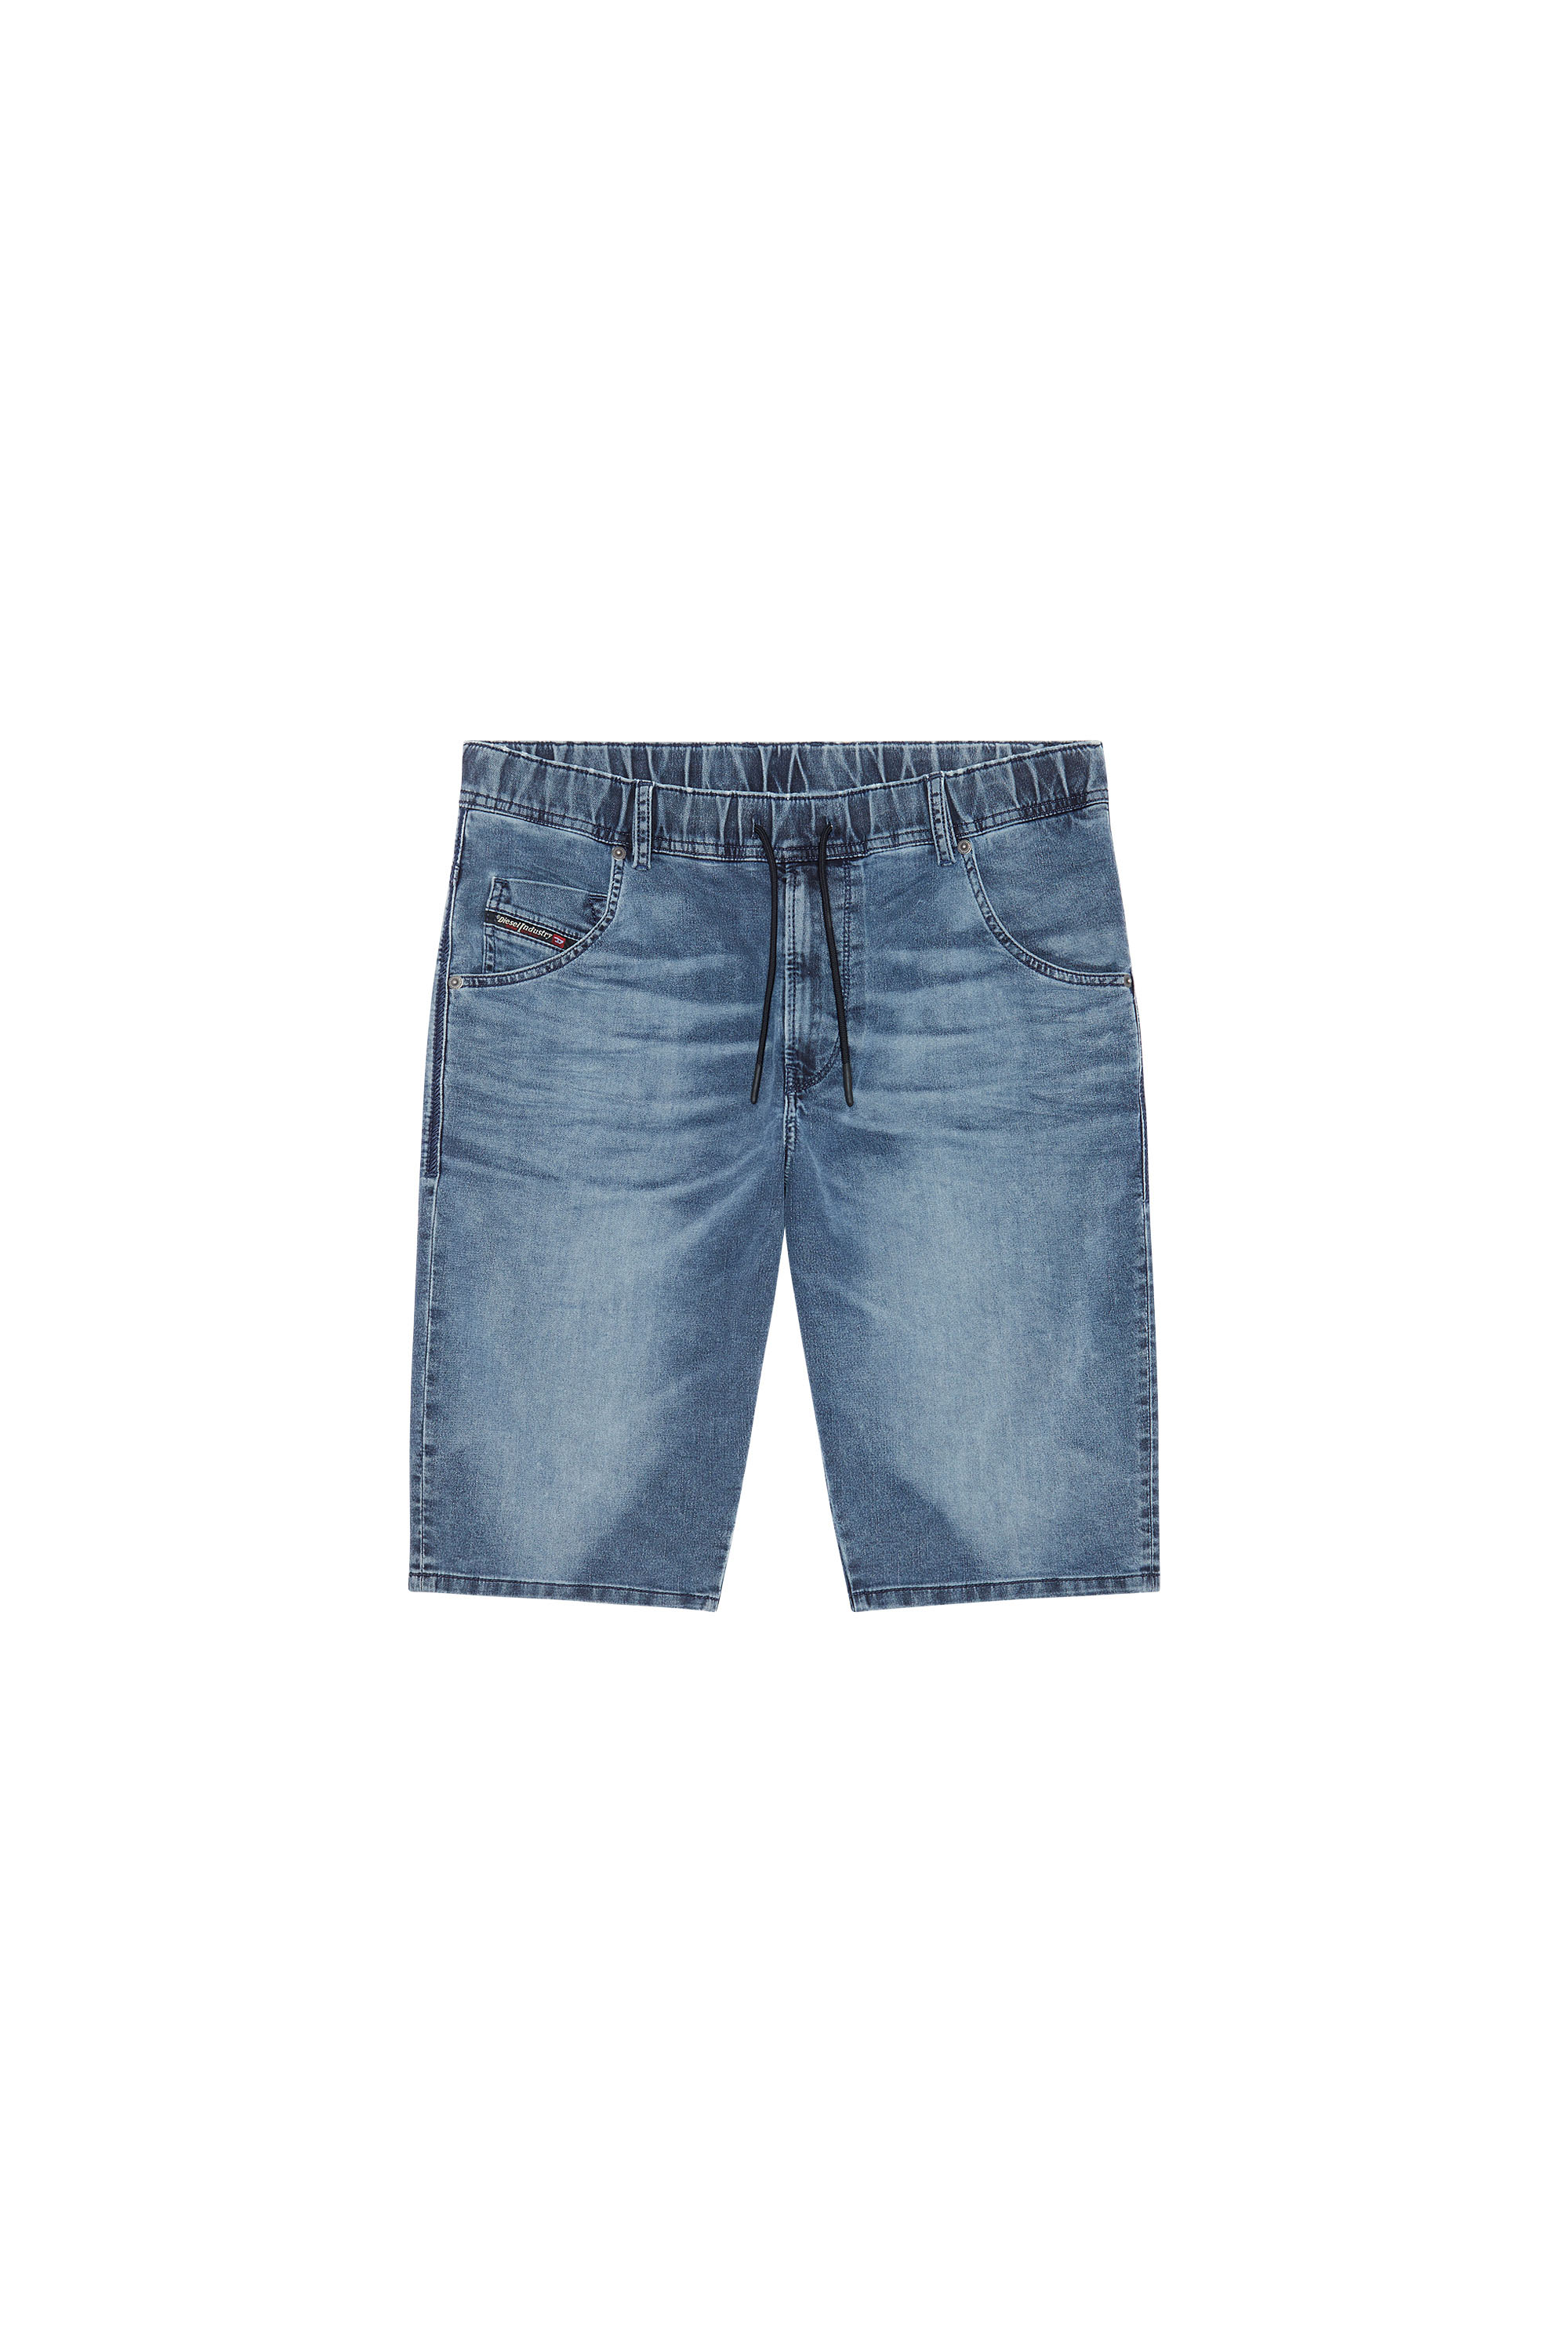 discount 60% WOMEN FASHION Jeans Shorts jeans Basic TLS Collection shorts jeans Blue 34                  EU 